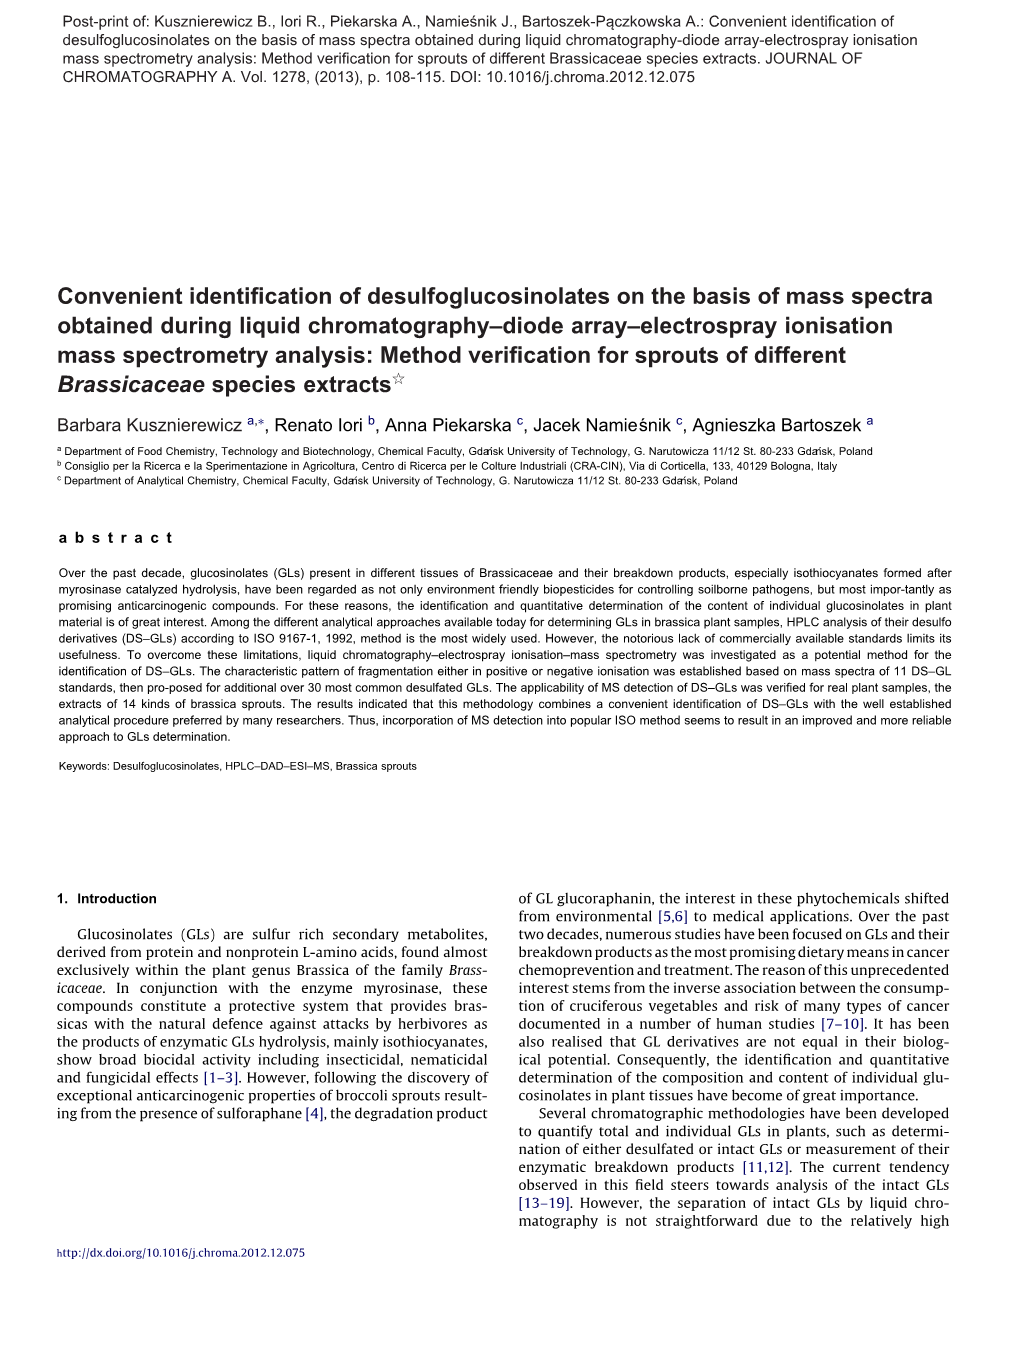 Convenient Identification of Desulfoglucosinolates on the Basis